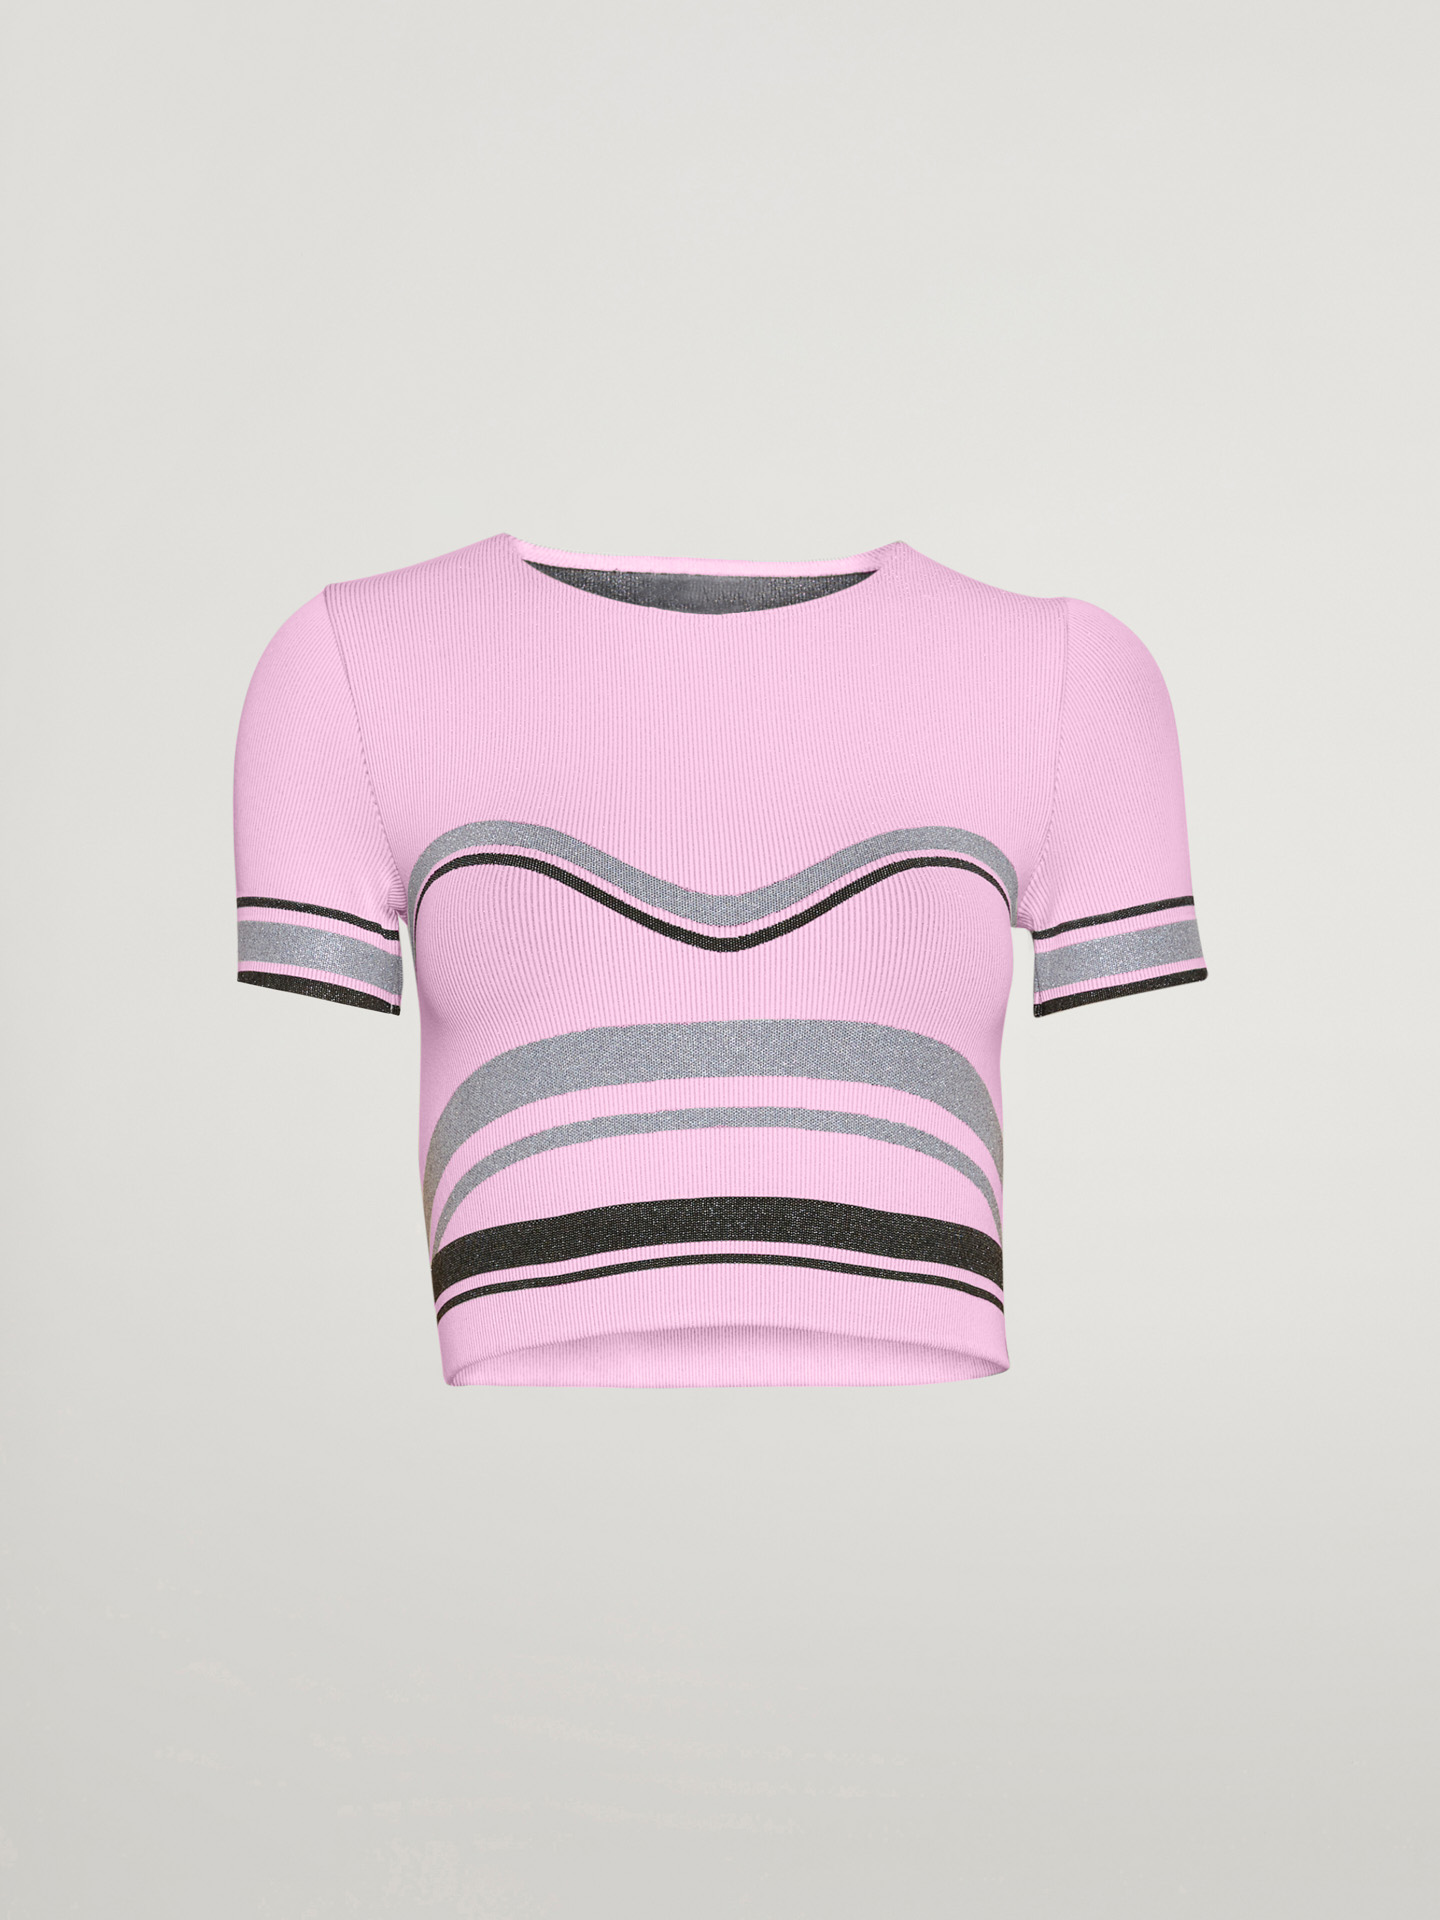 Wolford - Shaping Stripes Crop Top, Frau, prisma pink/silver/black, Größe: XS von Wolford